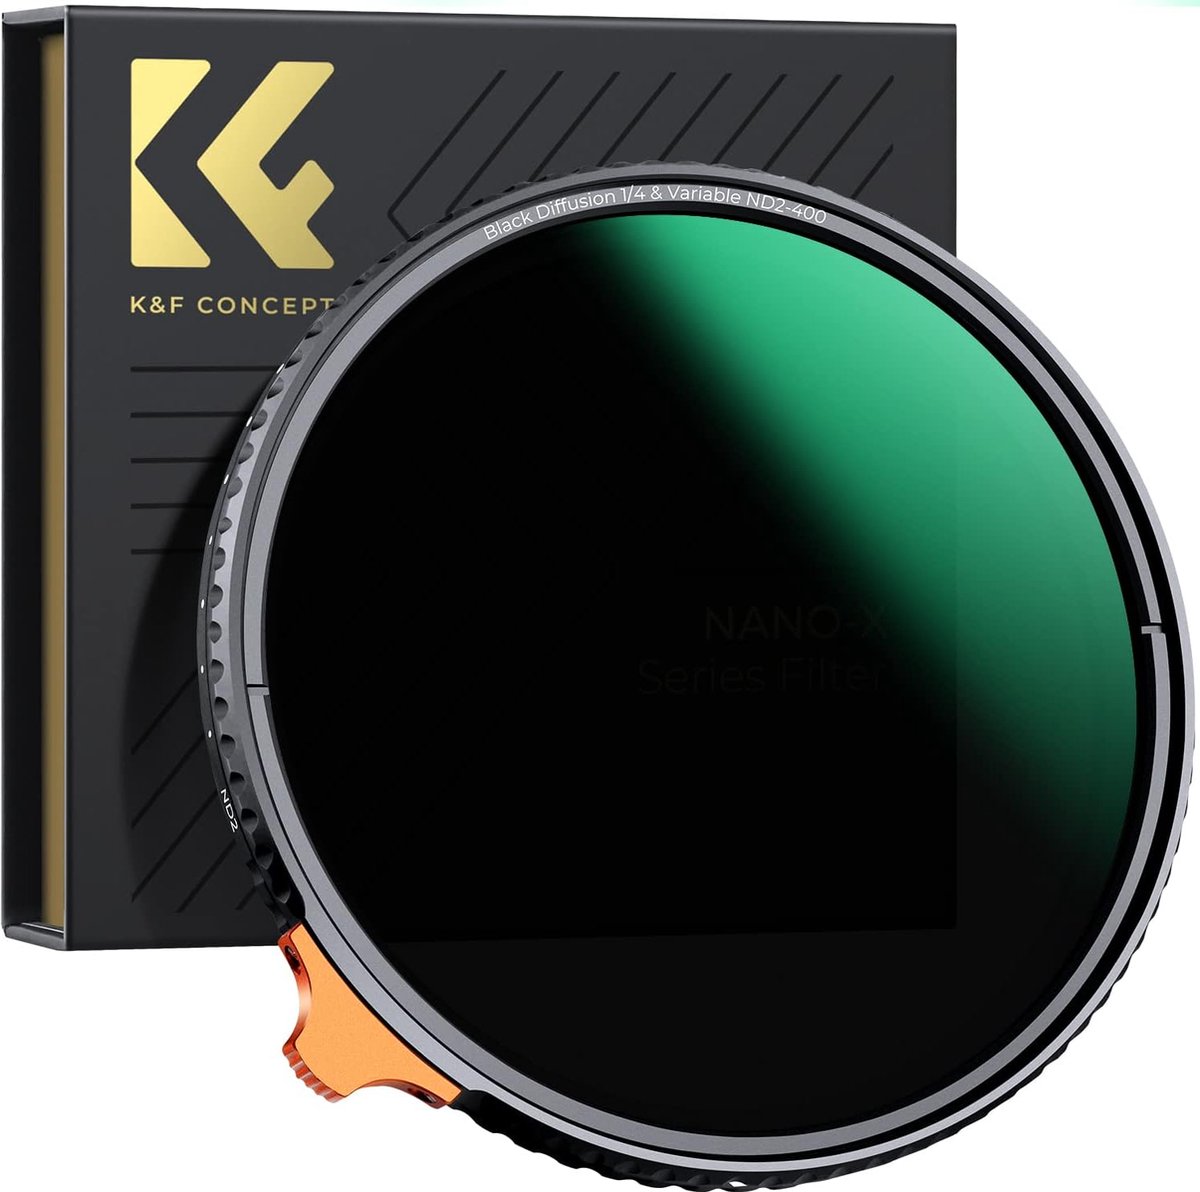 K&F Concept - Variabel ND2-ND400 Promist Filter - Fotografie Accessoire - Verstelbaar ND Filter - Camera Lens Filter met Promist-effect